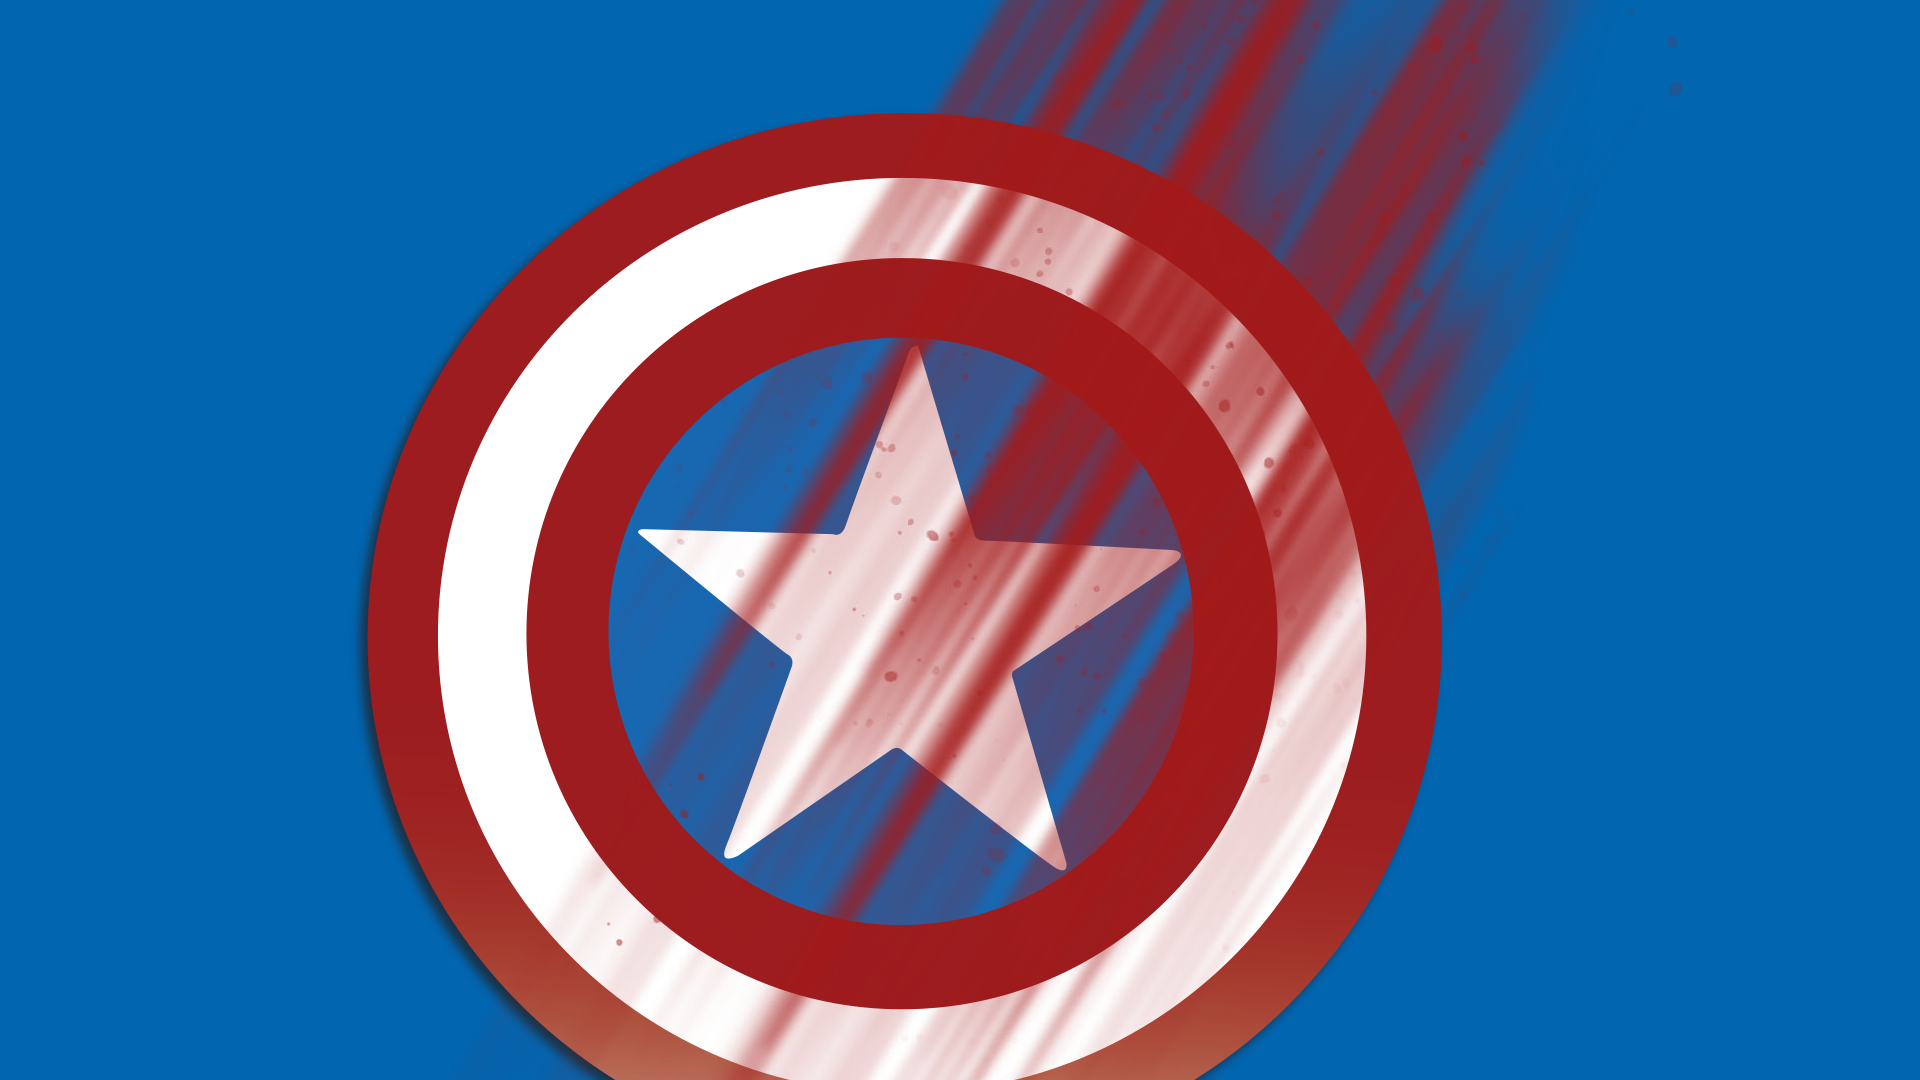 Tweet Ics Captain America Marvel Resolution